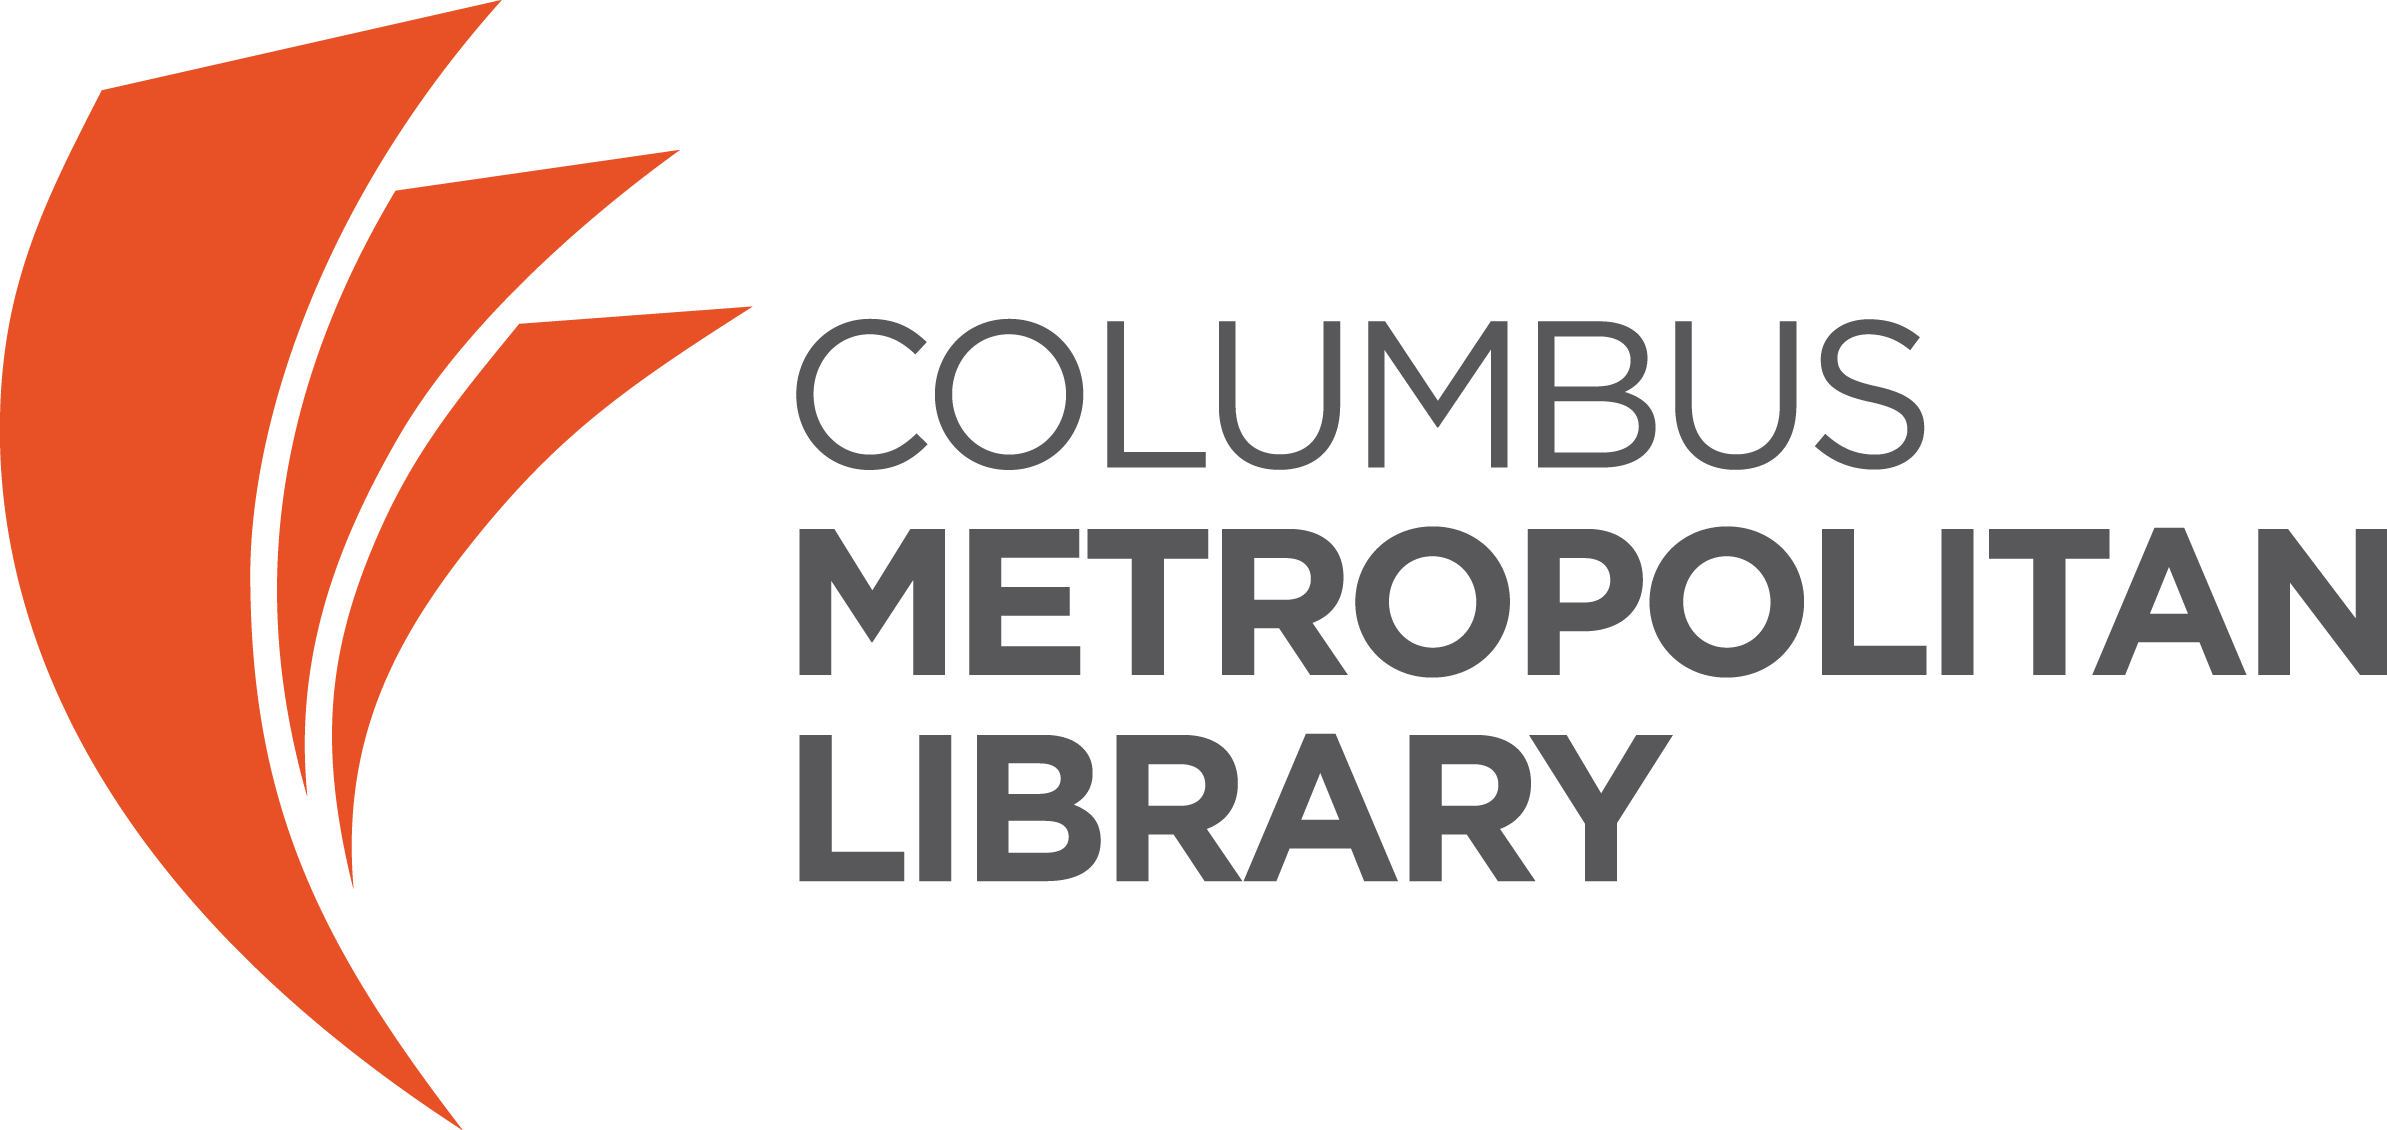 The Columbus Metropolitan Library